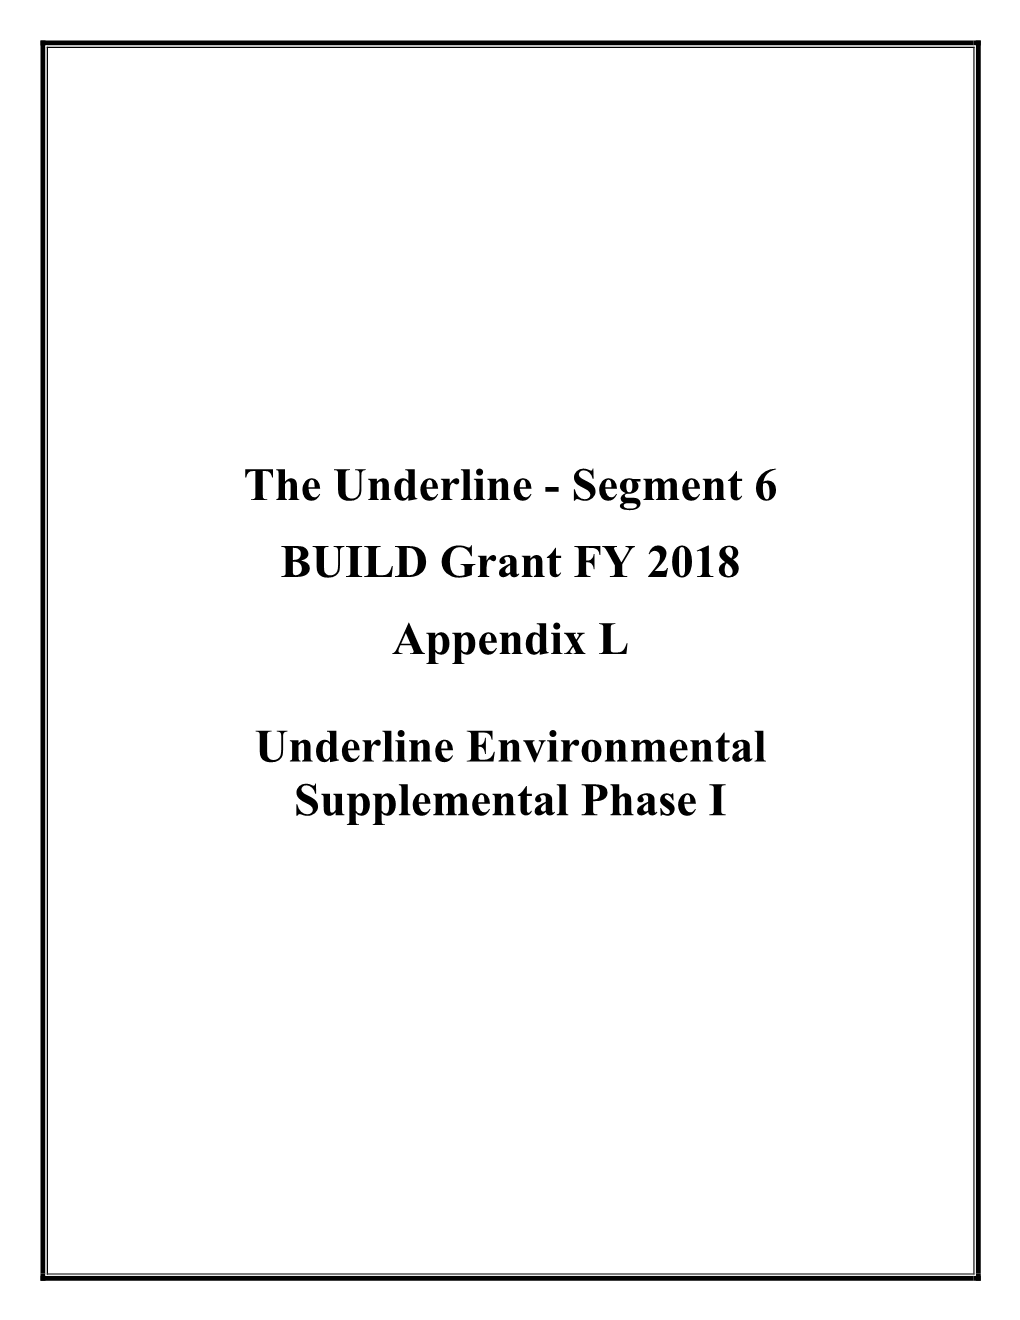 Appendix L. Underline Environmental Supplemental Phase I